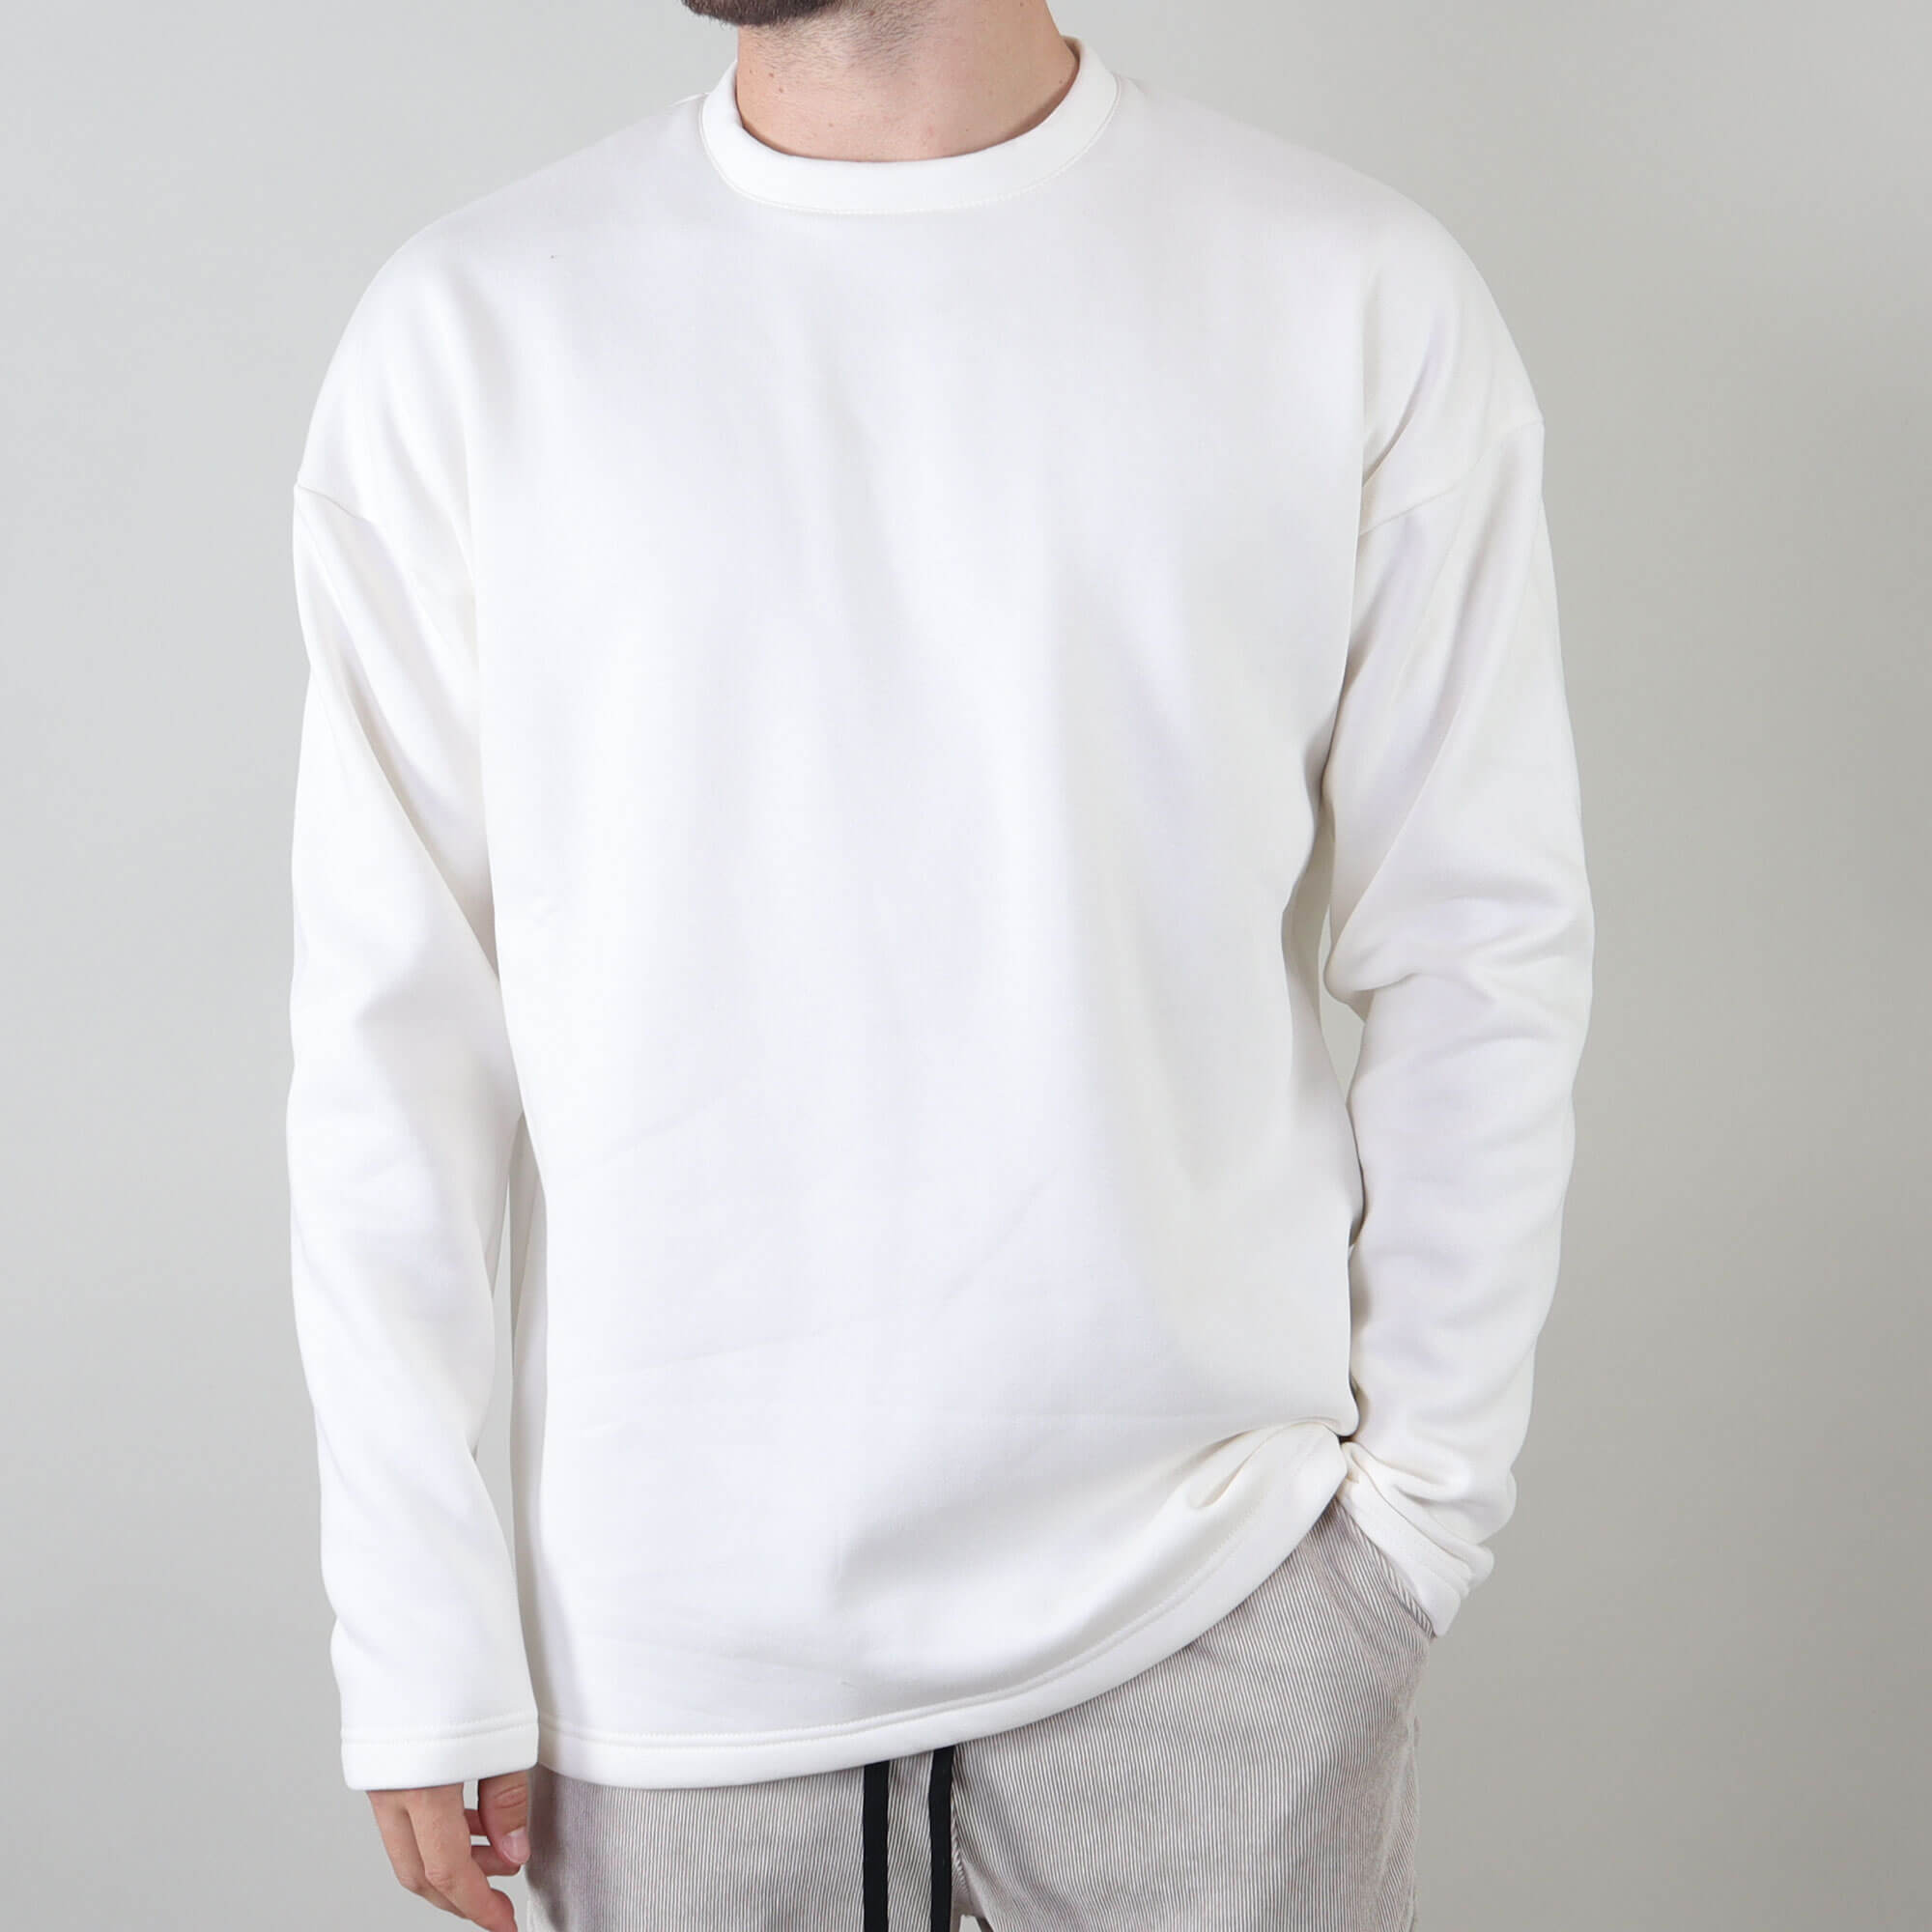 PRJCT sweater off white